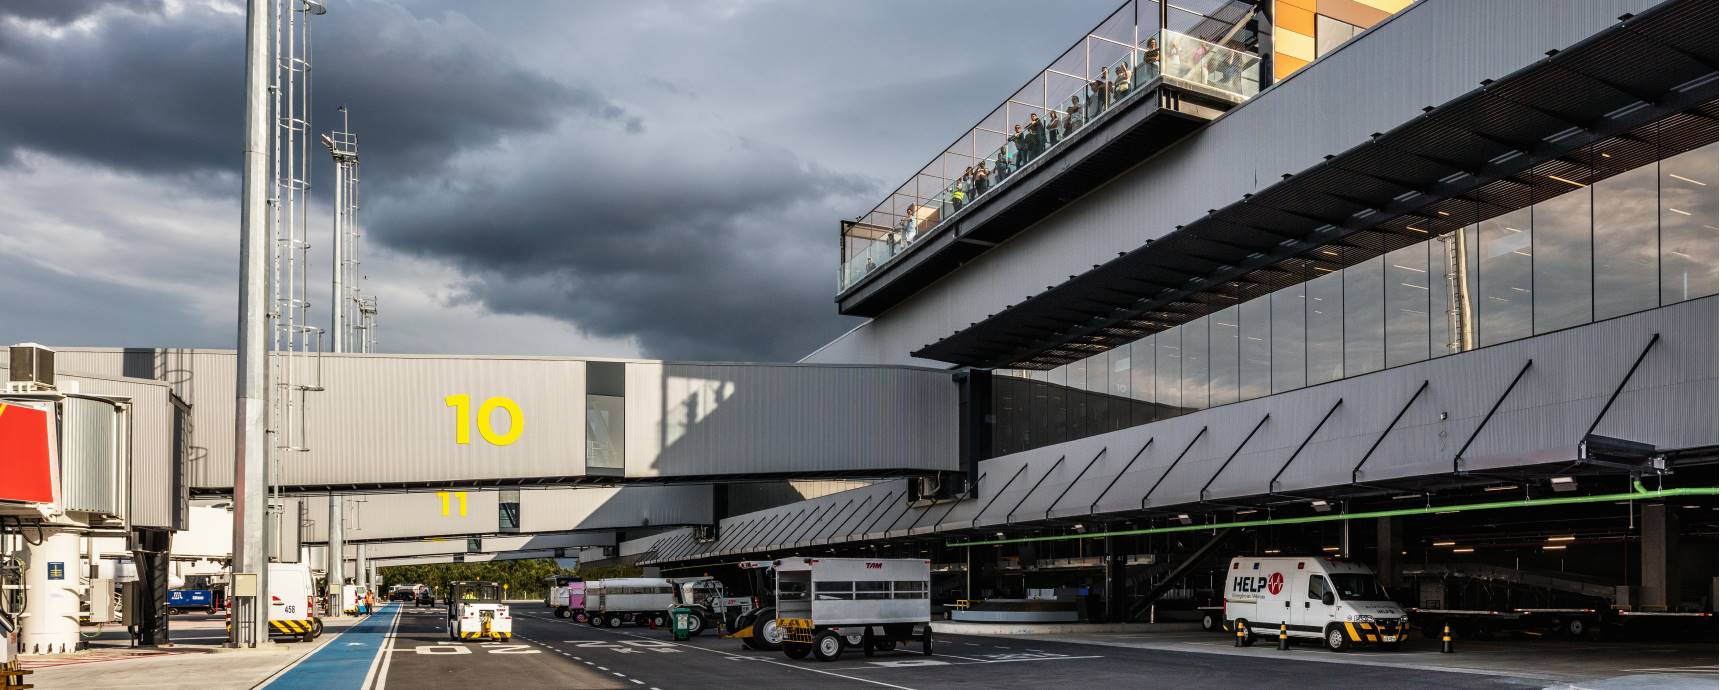 Aeroporto Internacional de Florianópolis é eleito pelo segundo ano consecutivo o melhor aeroporto do Brasil